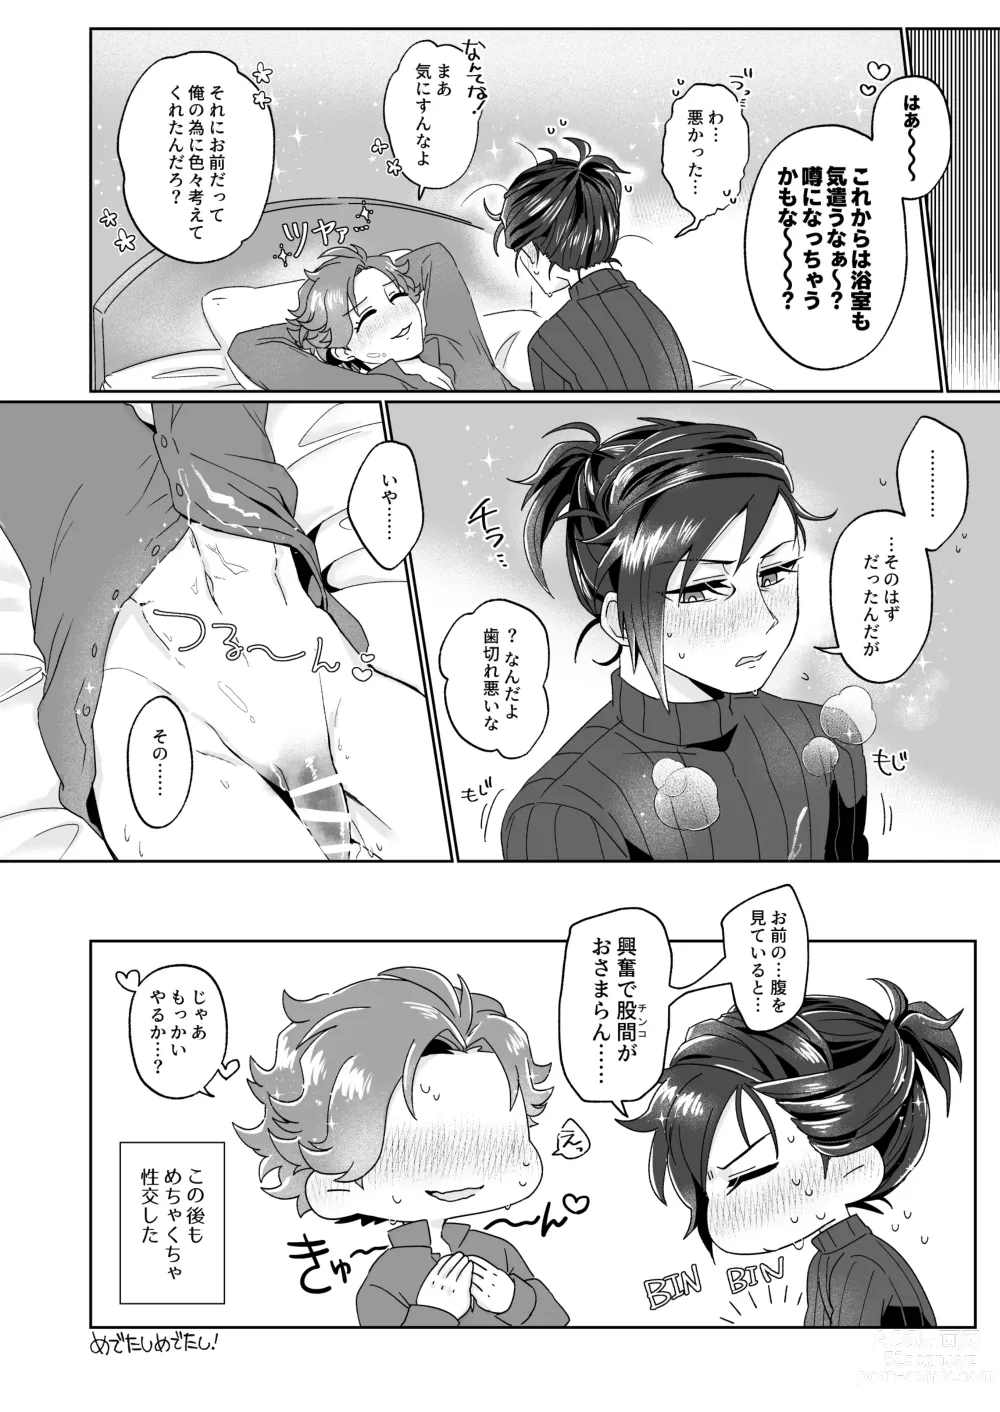 Page 18 of doujinshi Shaving Panic!